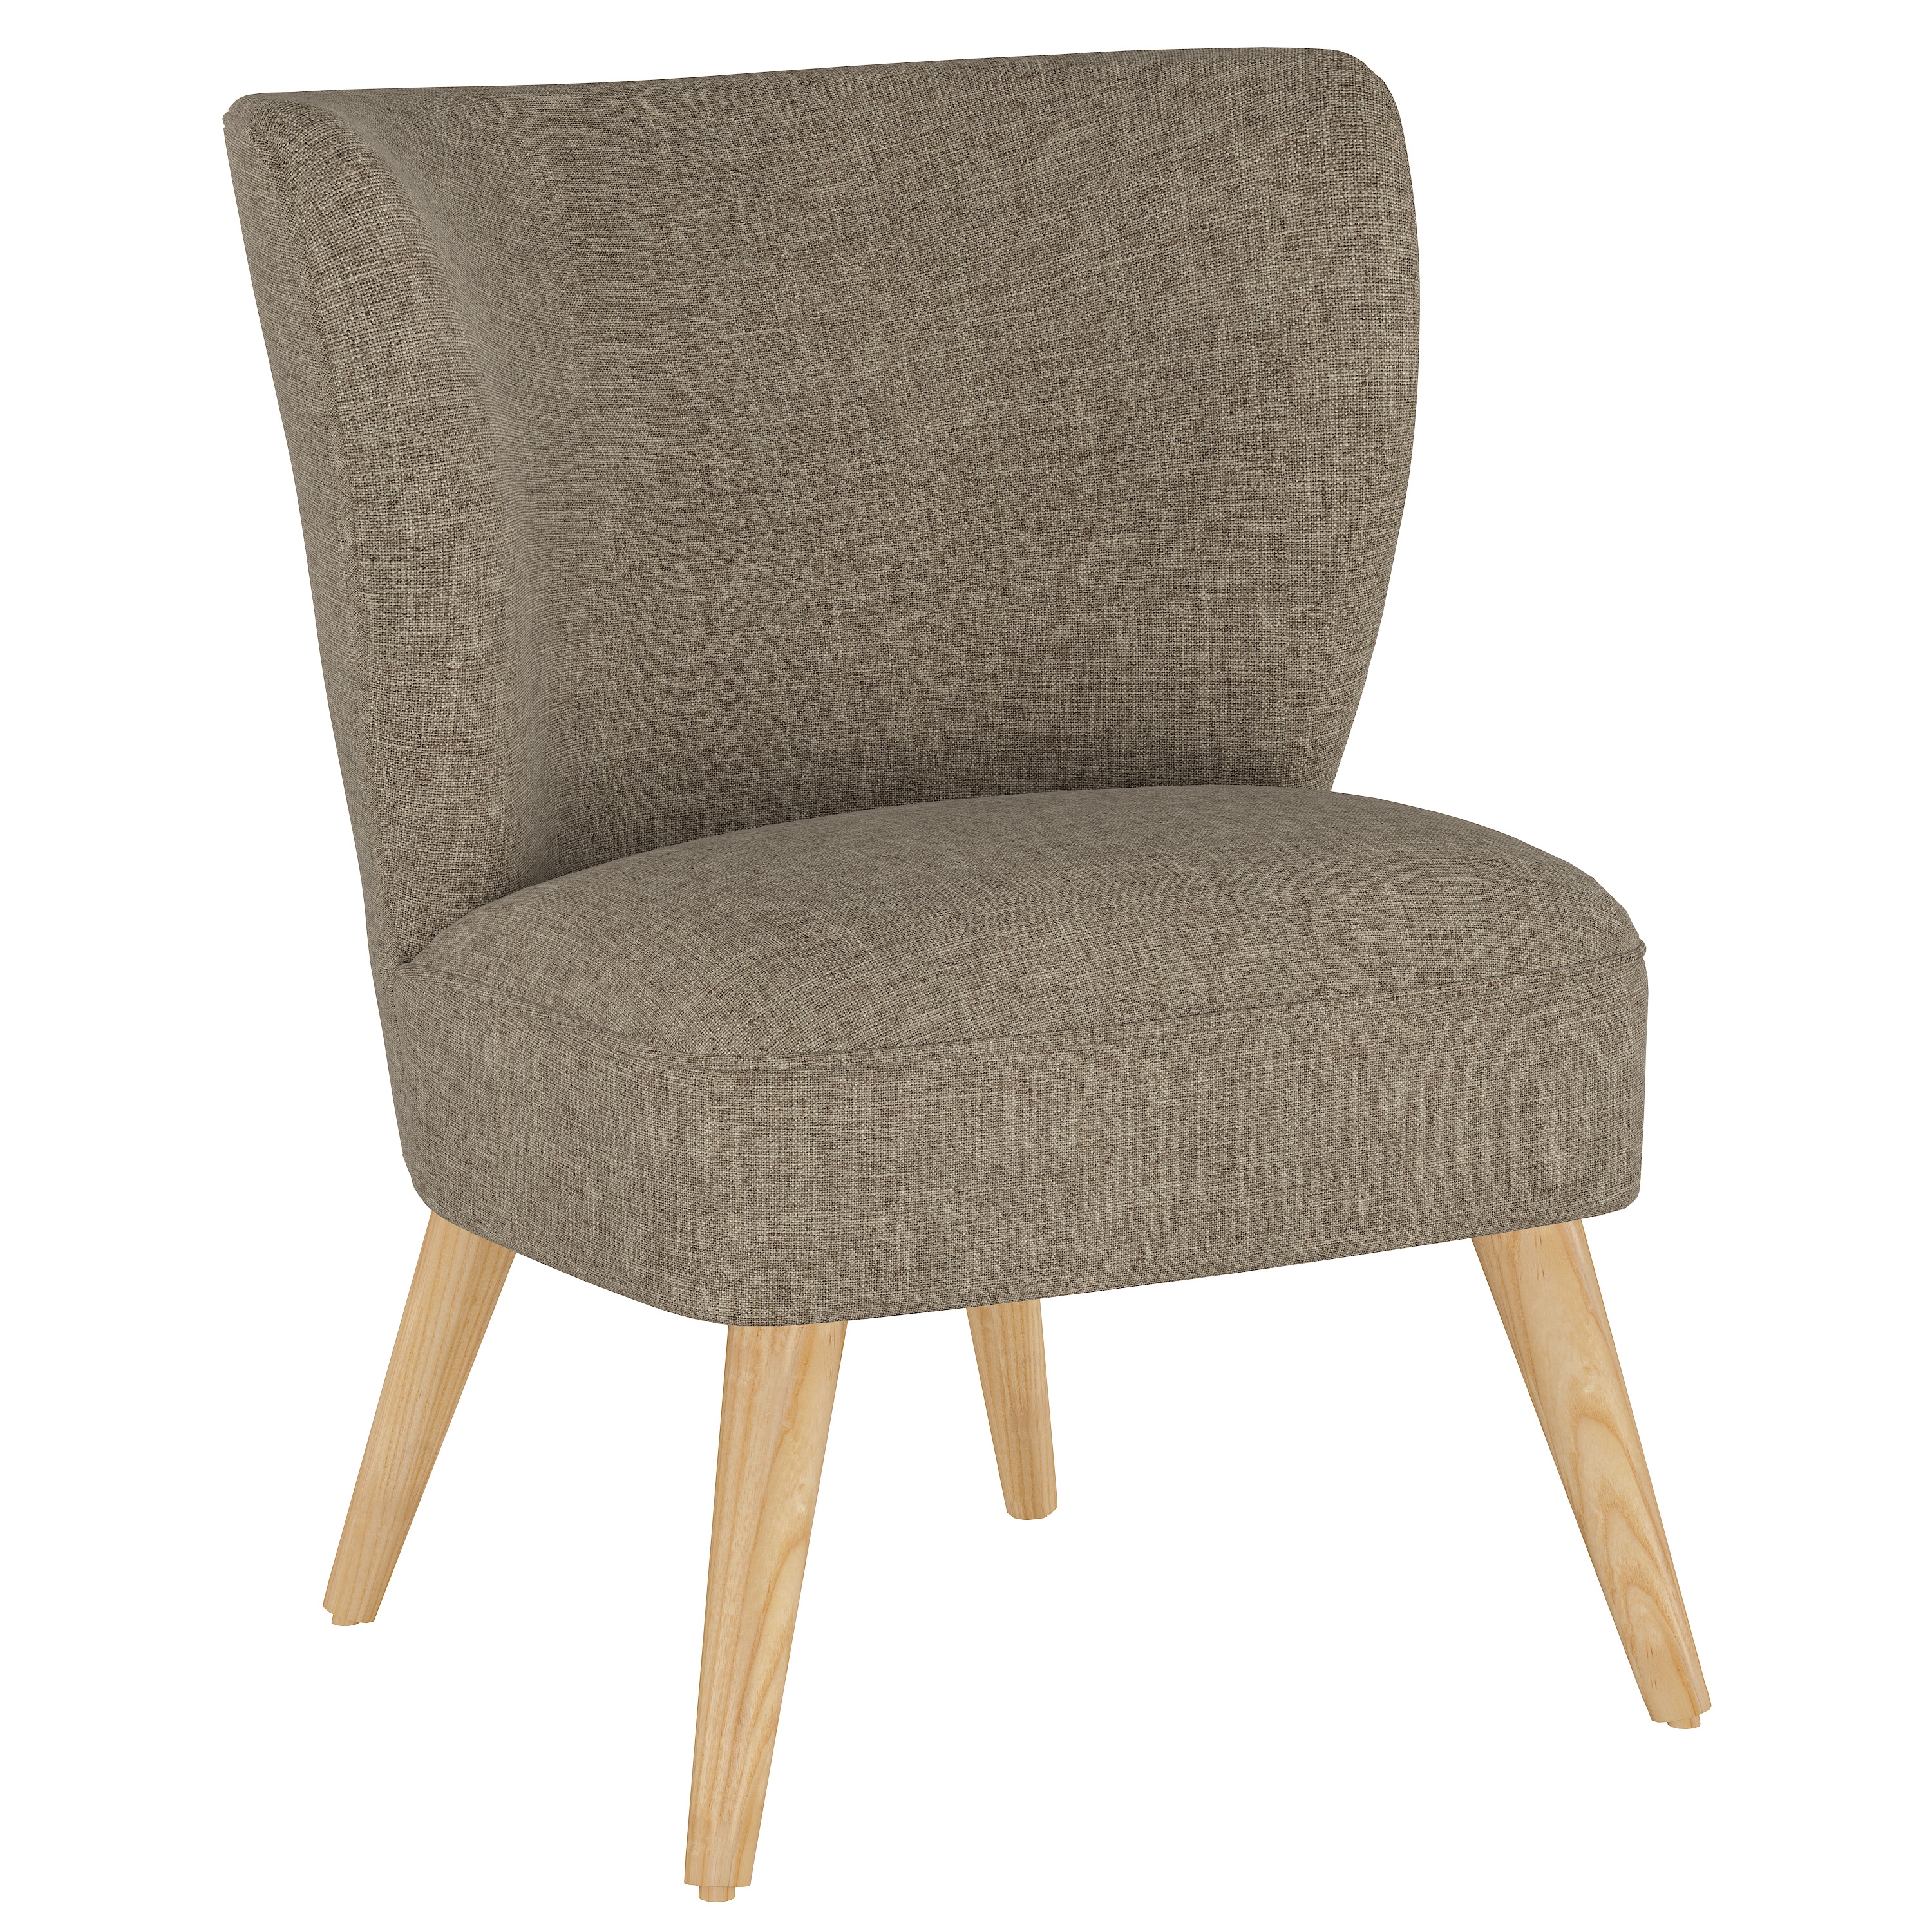 Altgeld Chair - Image 0